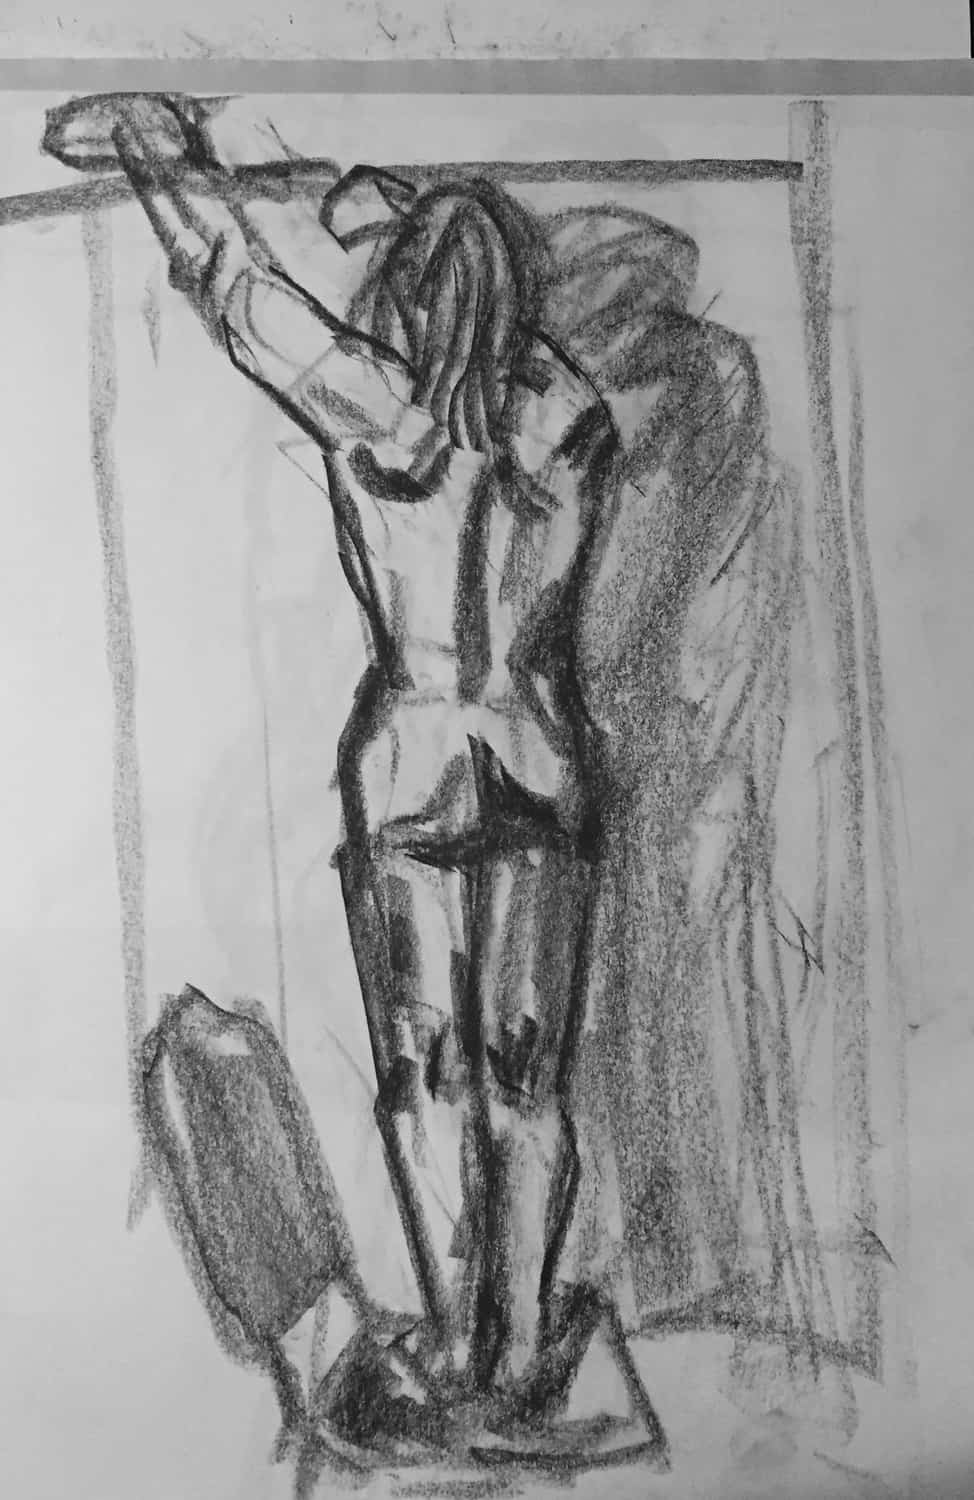 Man Reaching Up, Figure Drawings